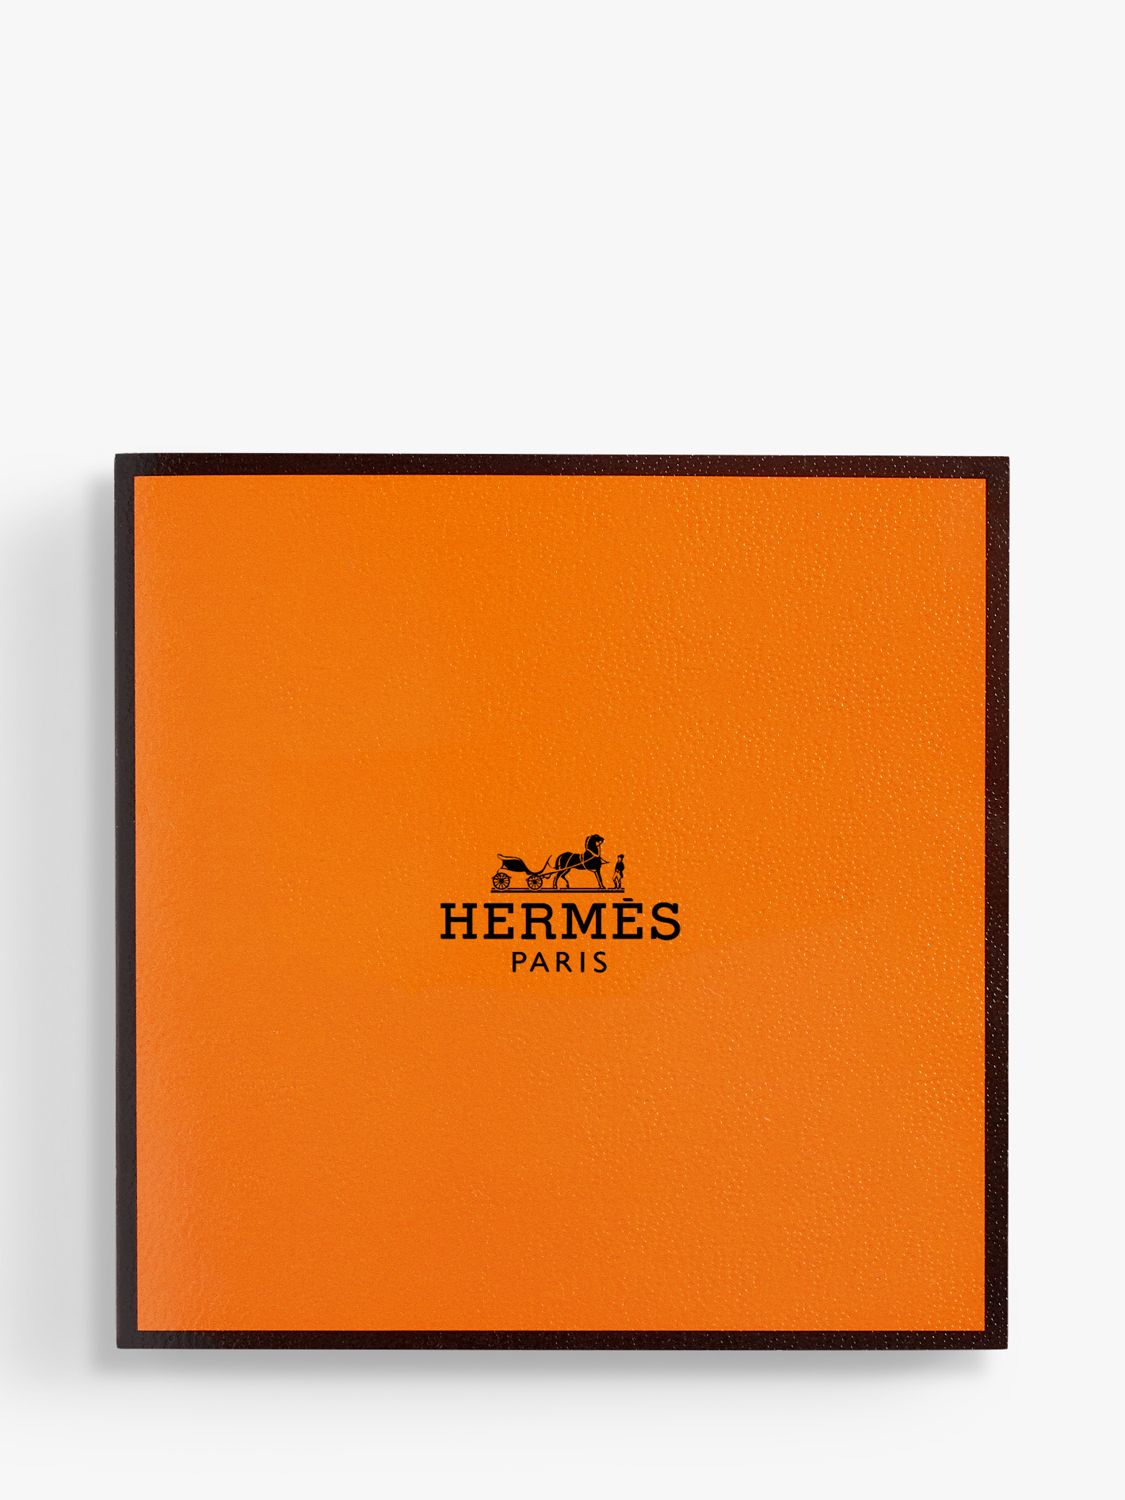 Hermès Plein Air Blotting Papers, x 100 3